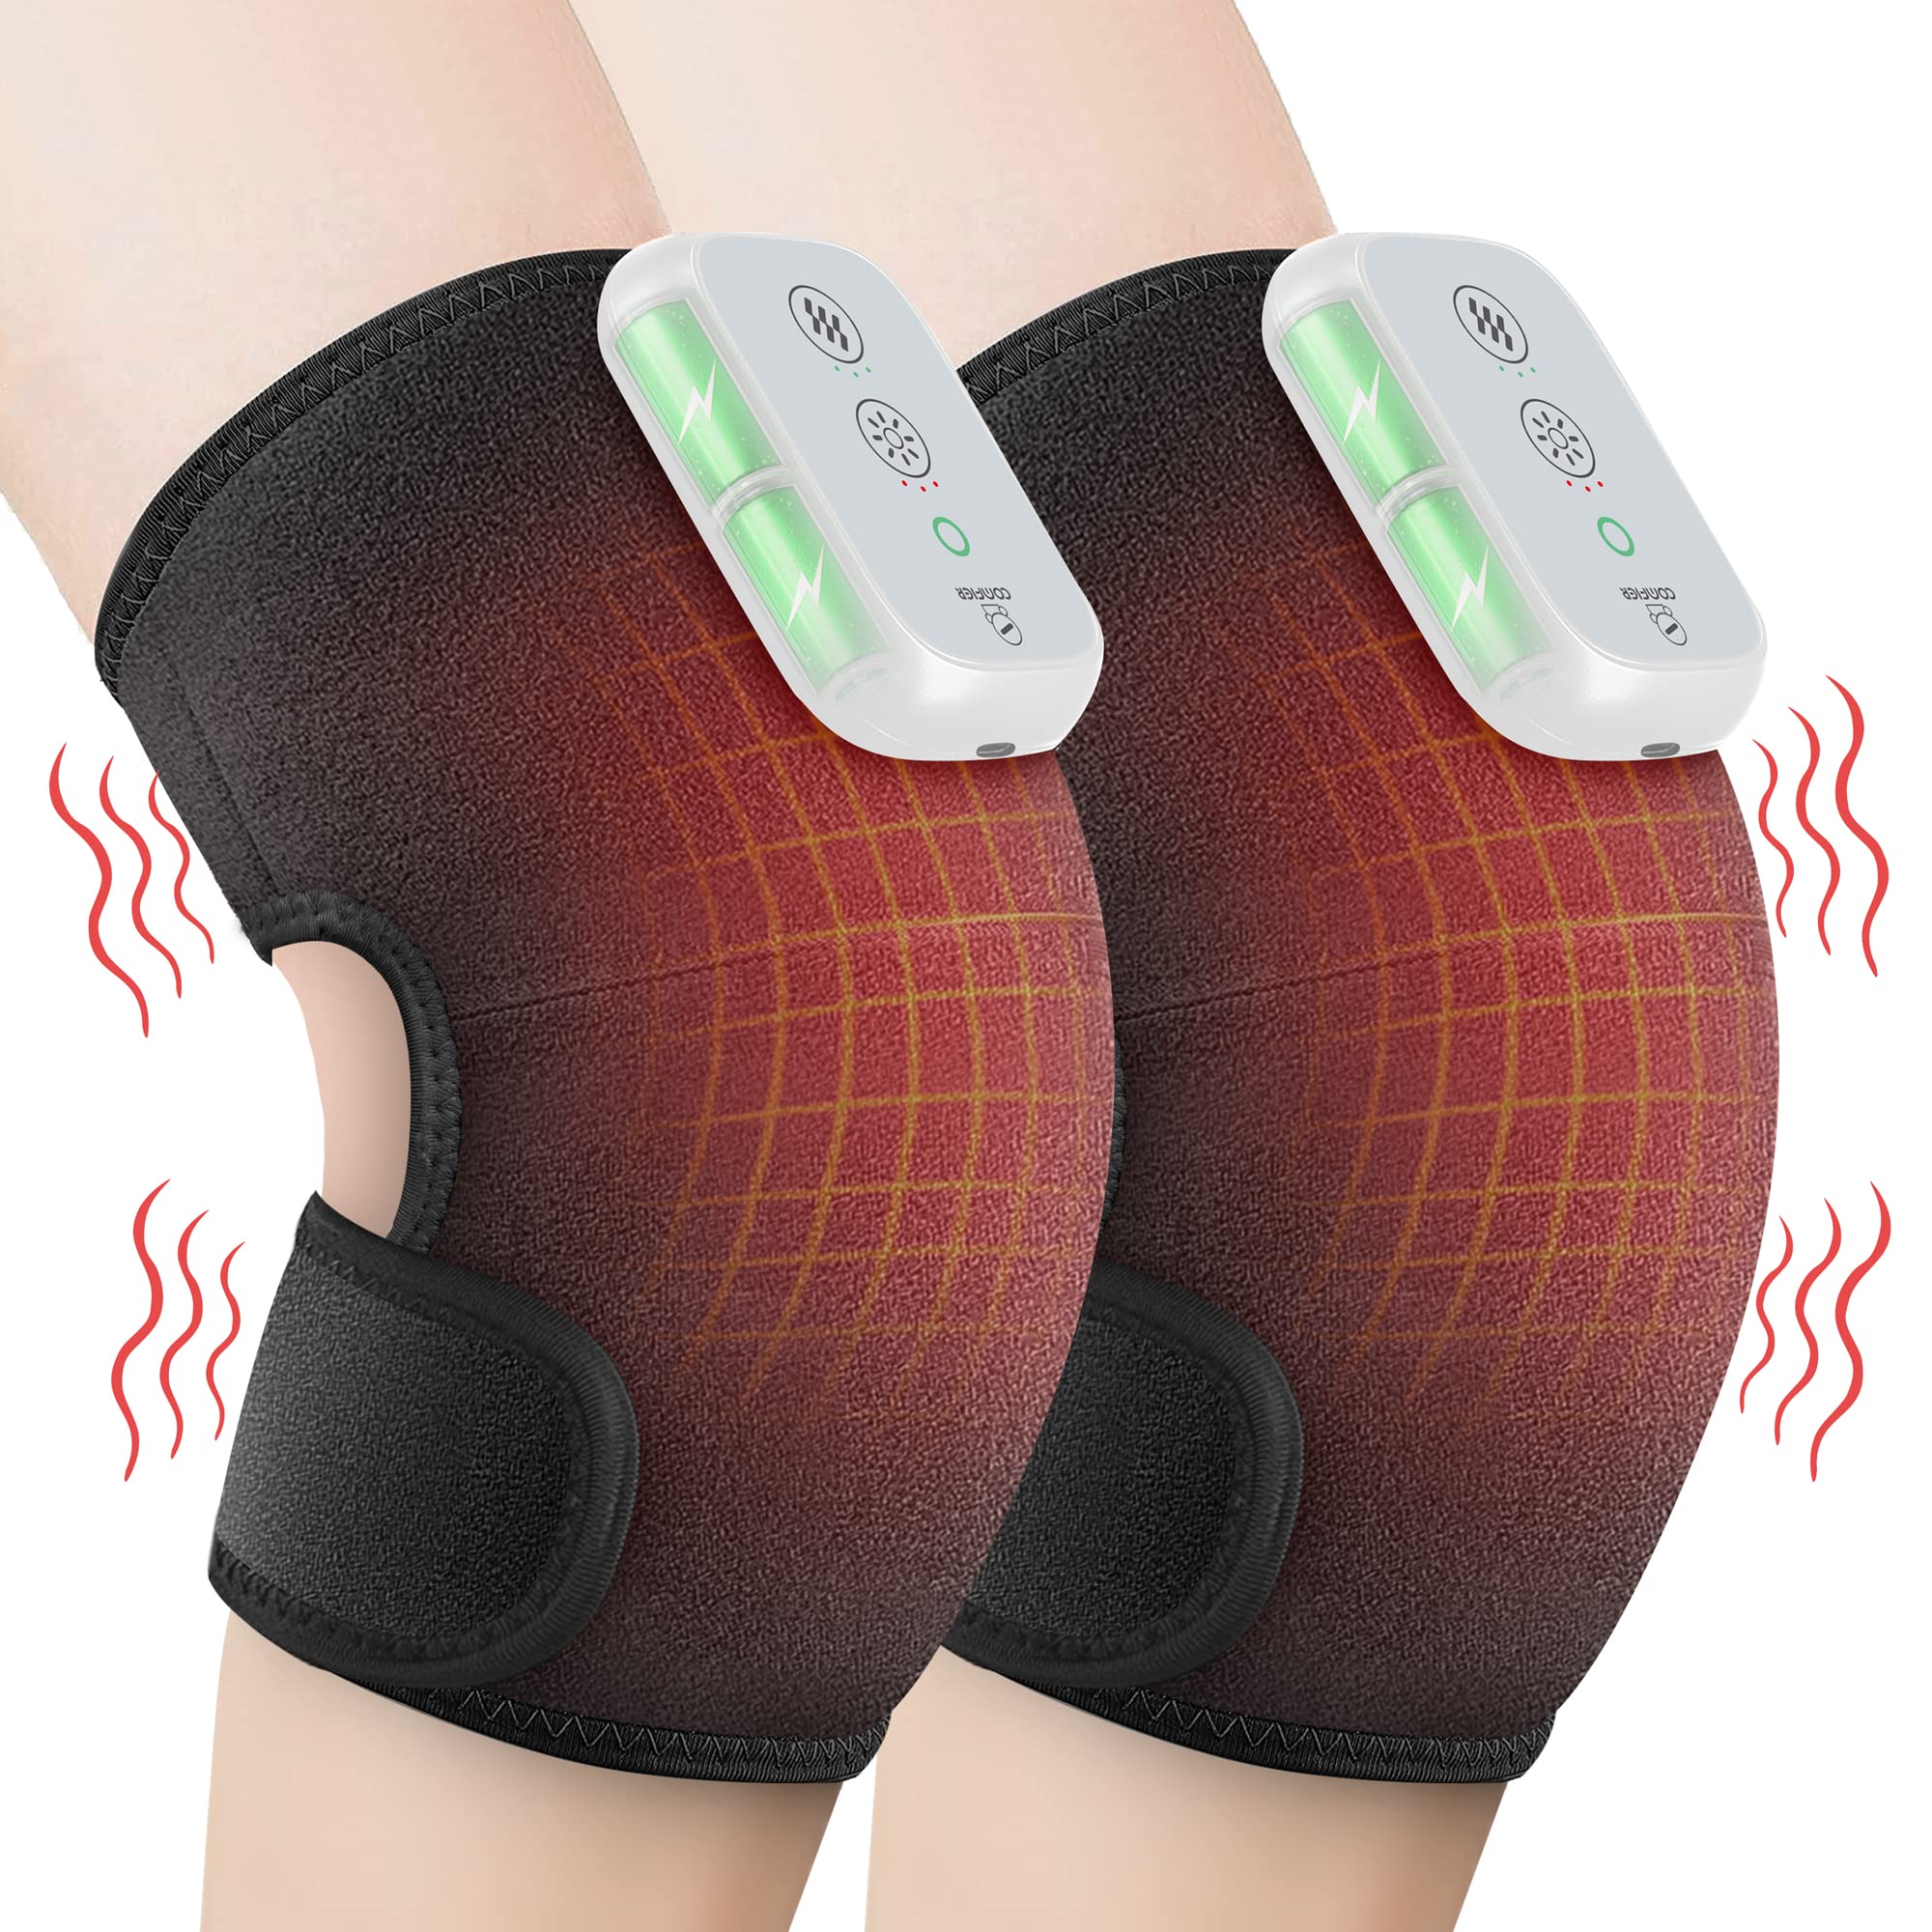 Comfier Heated Knee Brace review: An easy remedy for arthritis